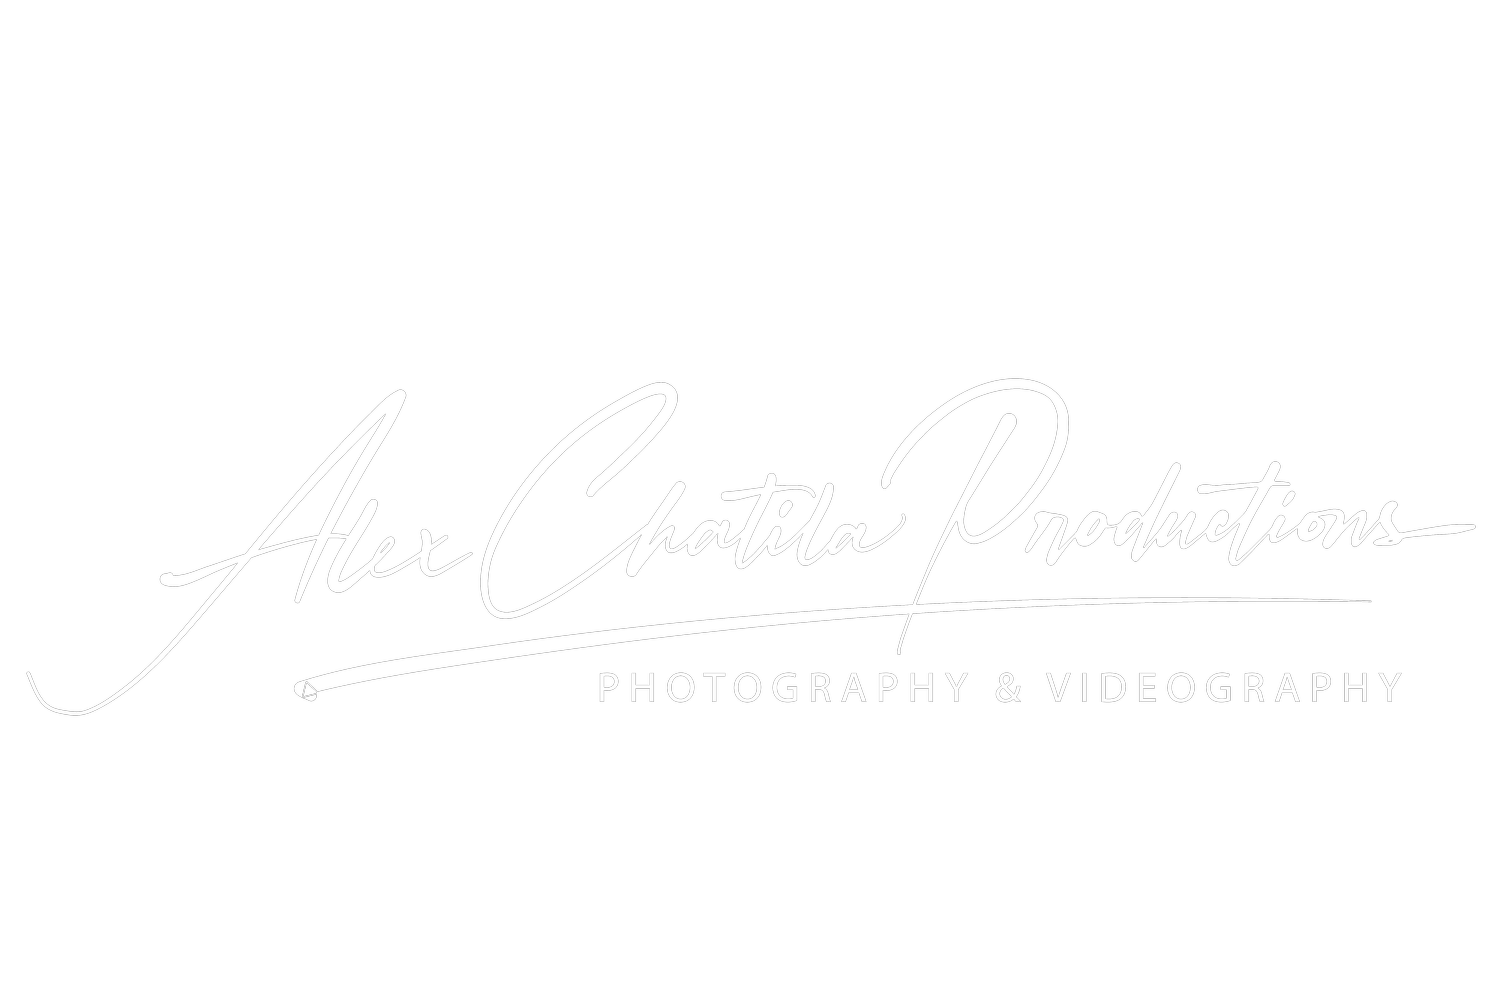 Alex Chatila Productions